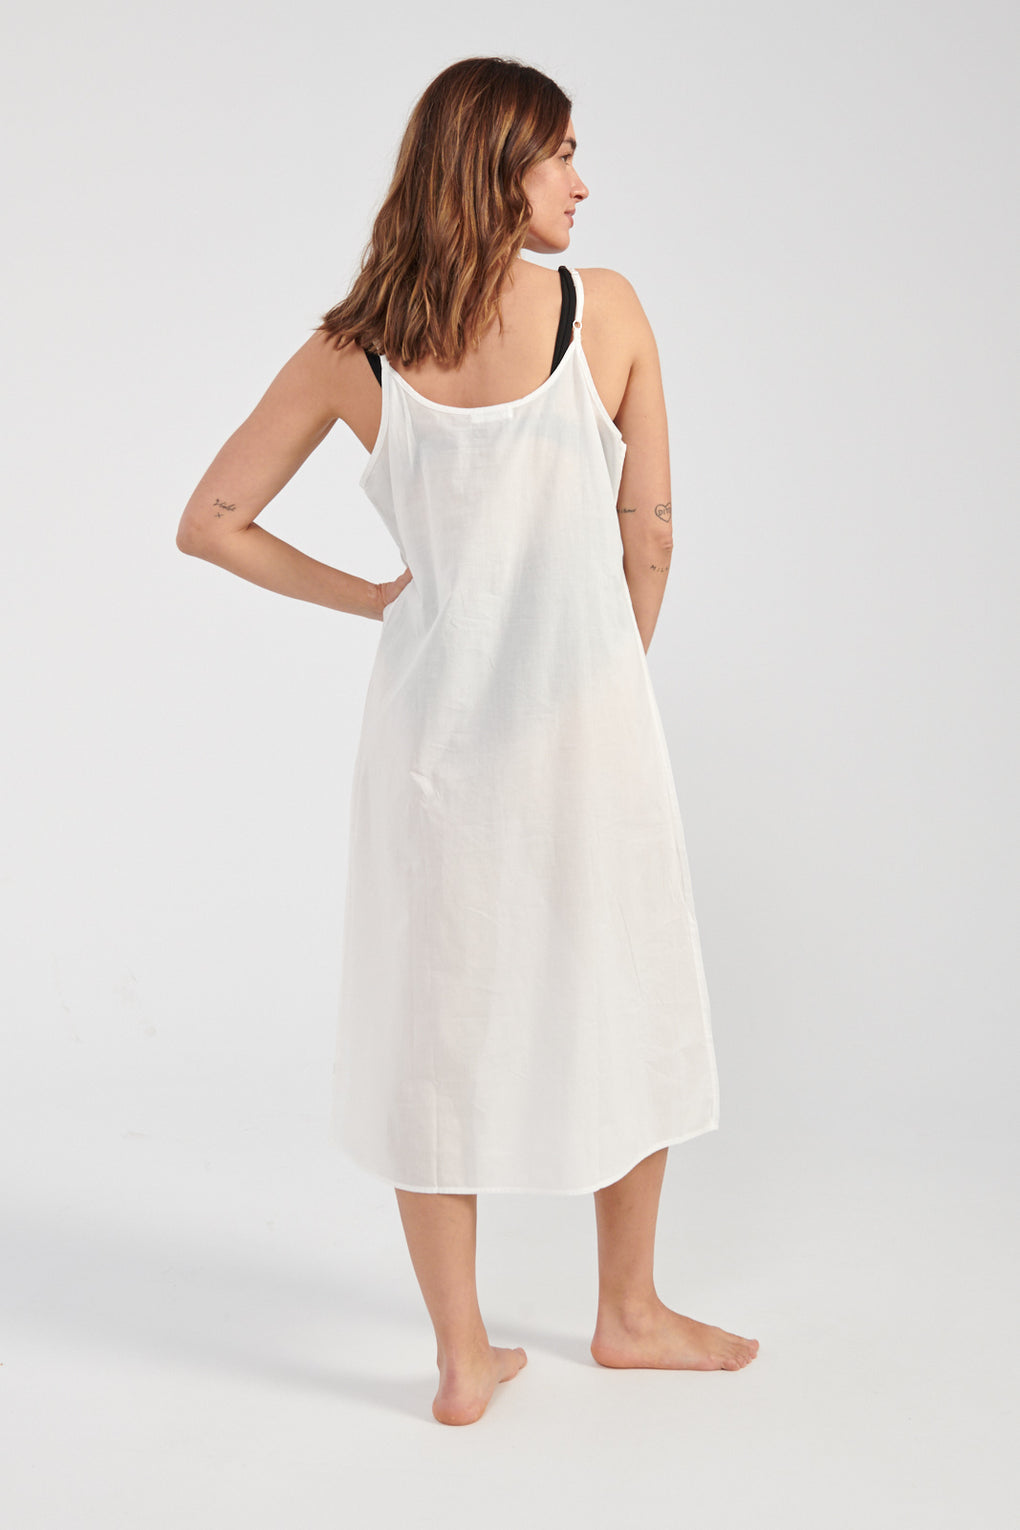 Salter Dress The First Nightdress white-Salter Dress white nightgown dress-Idun-St. Paul